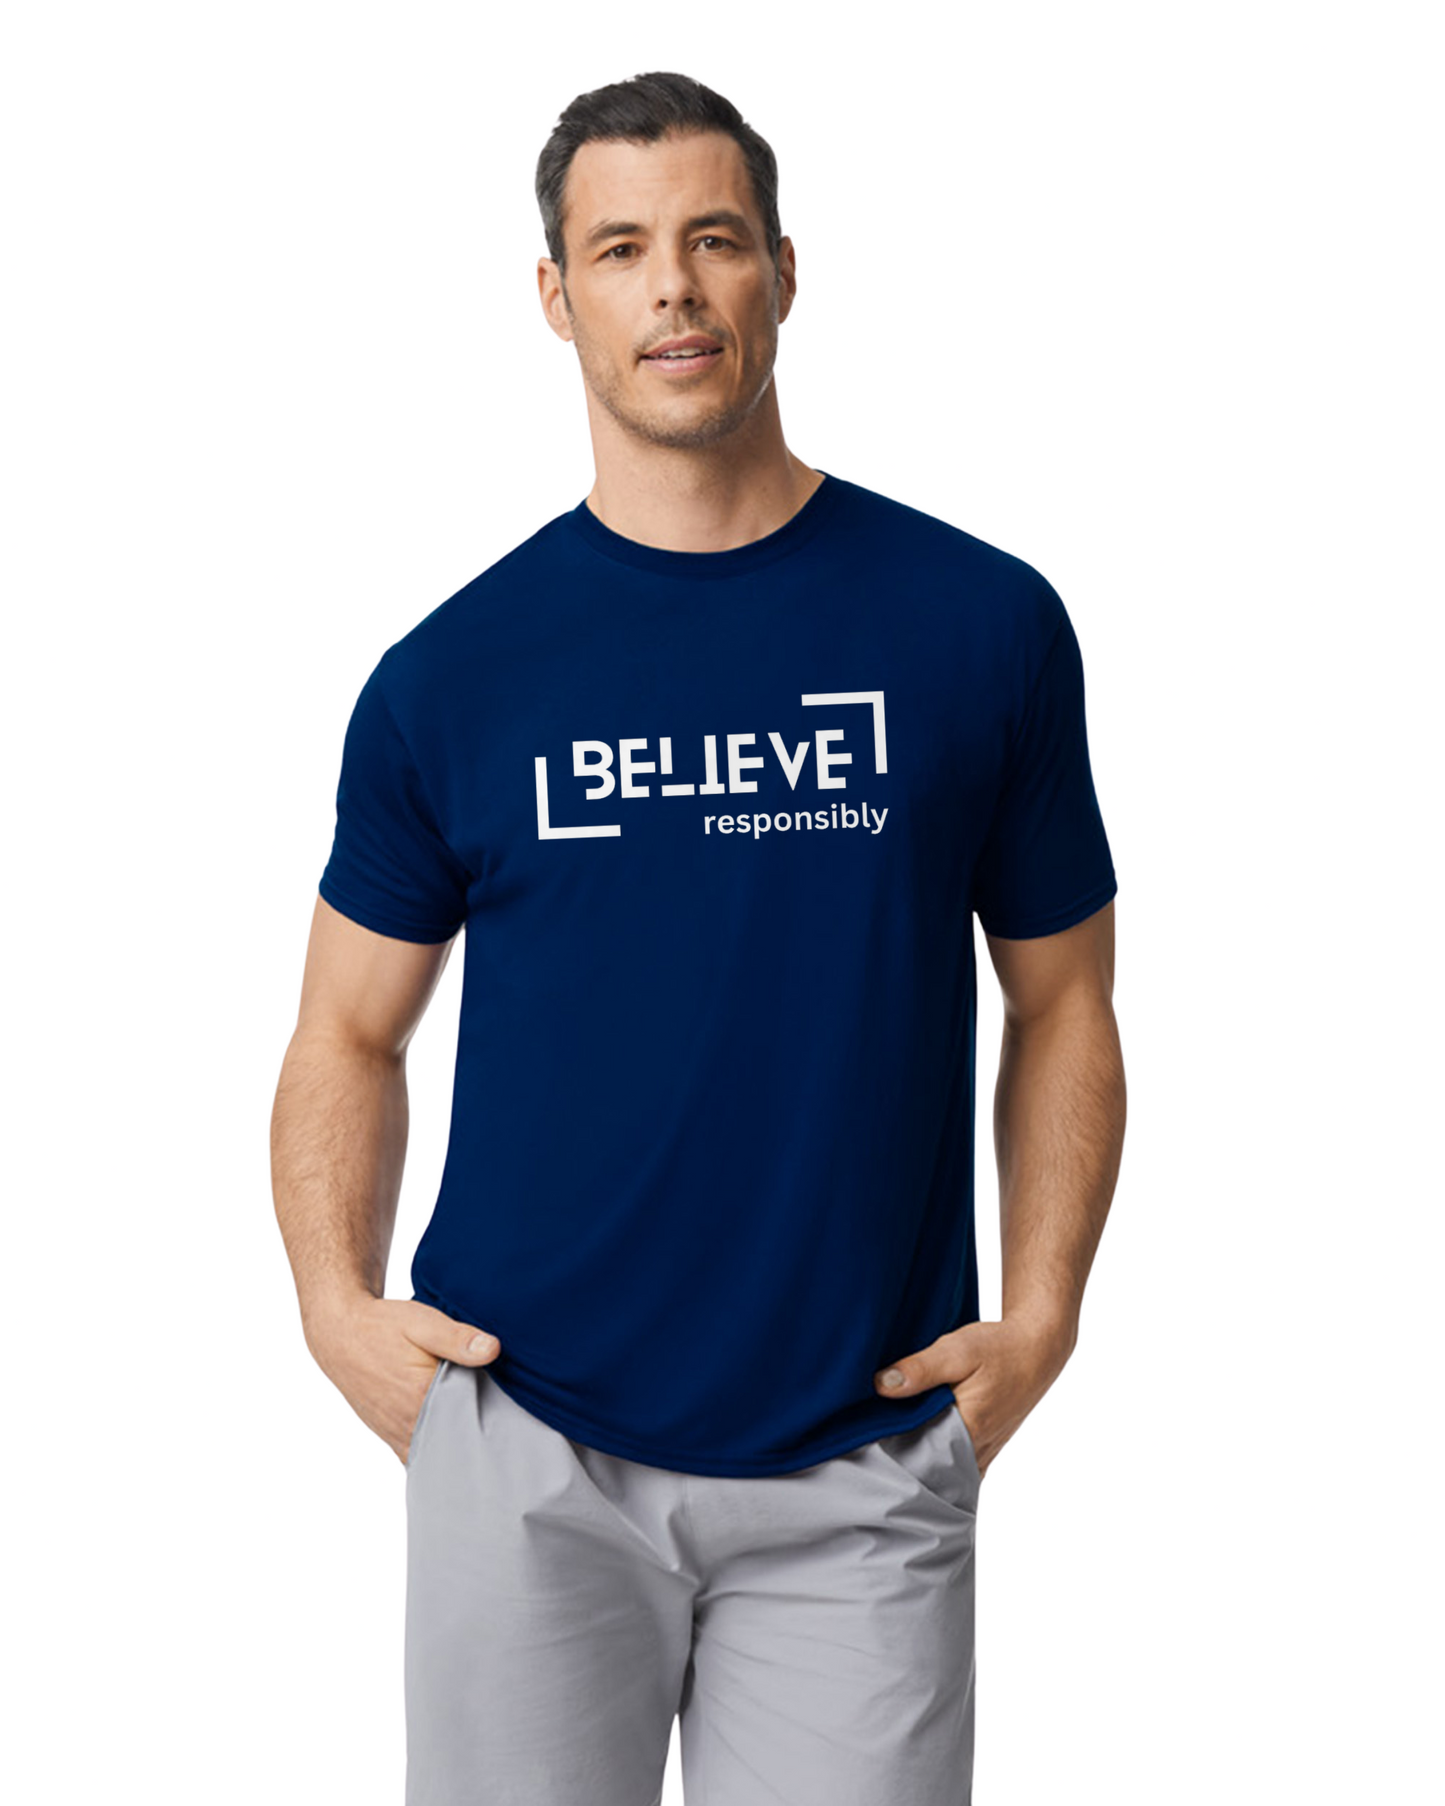 Believe Responsibly Men's Performance Shirt